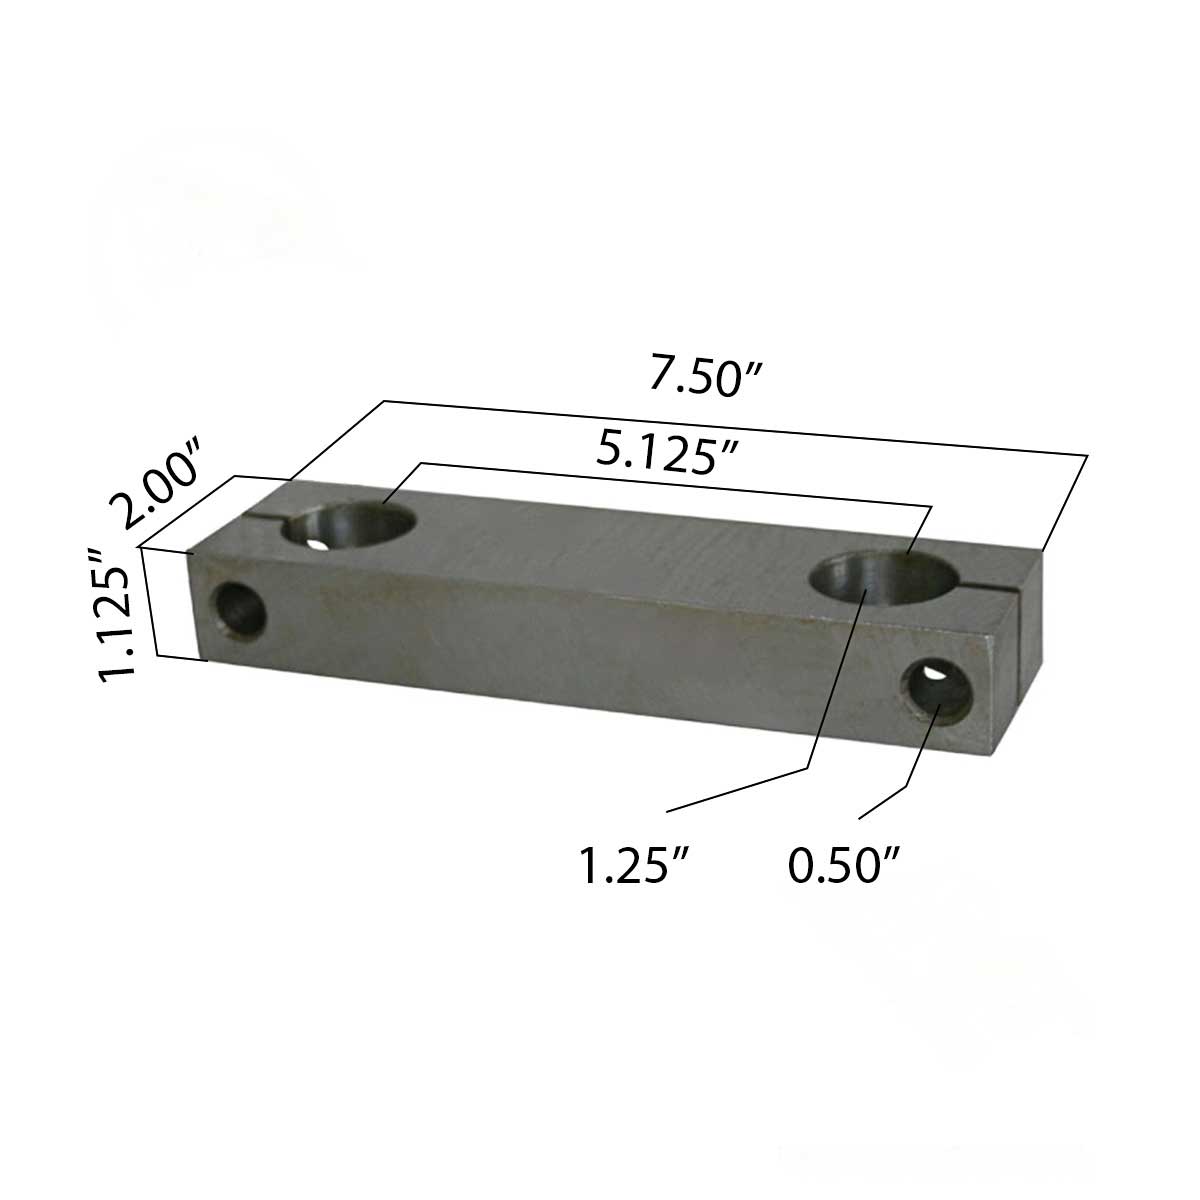 Peterbilt shackle side bar M1502 measurements.